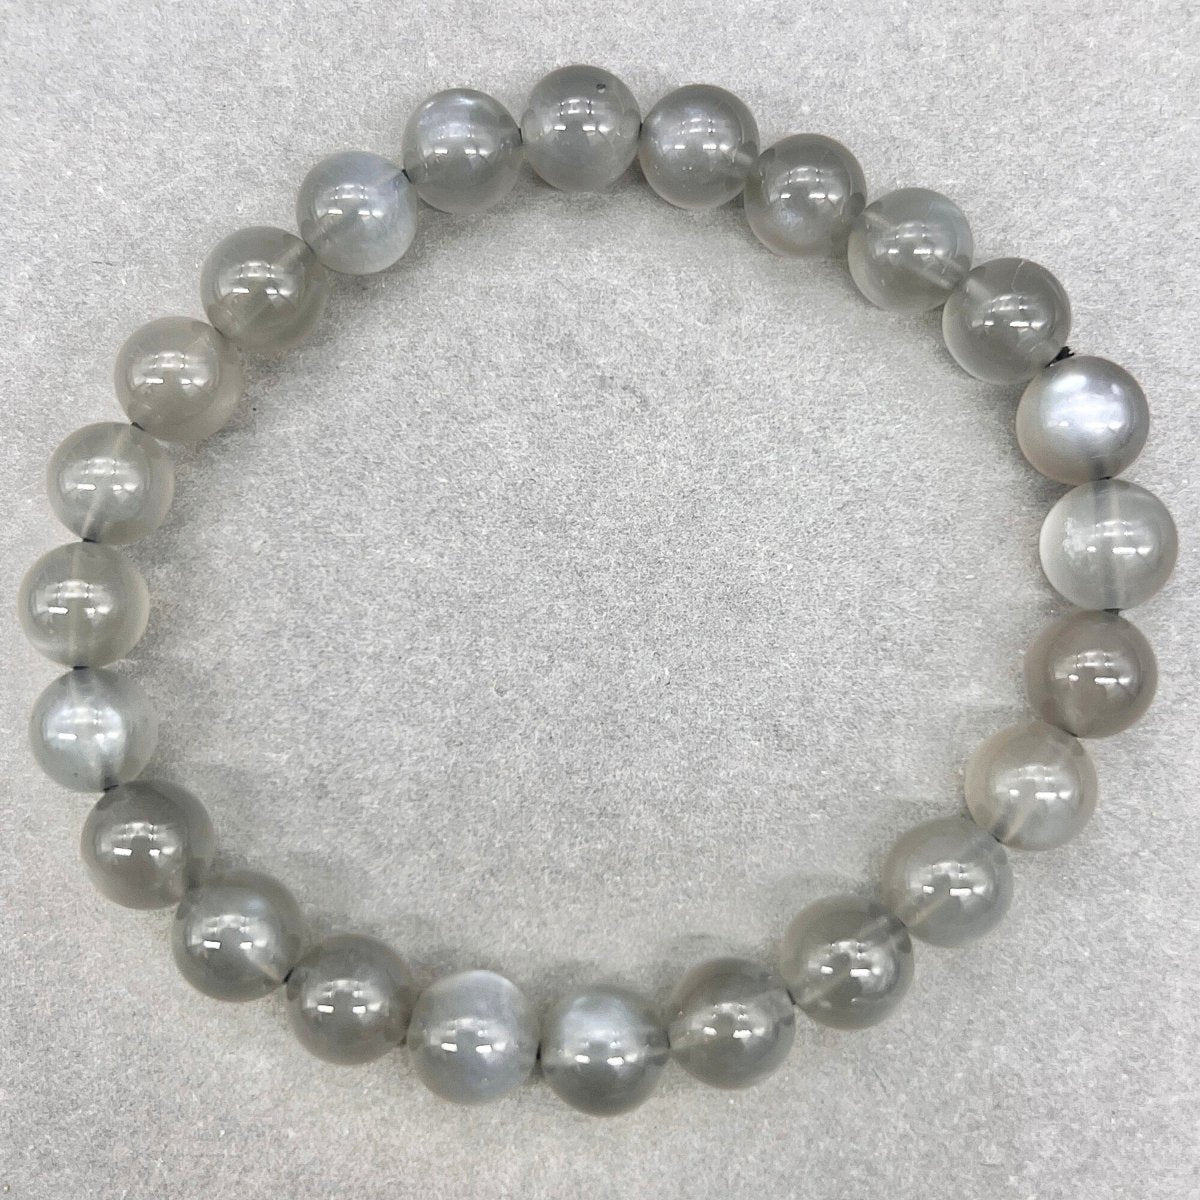 Gemstone Bracelets | Shop Healing Gemstones Jewelry, Crystals & Gemstones |  Great Prices